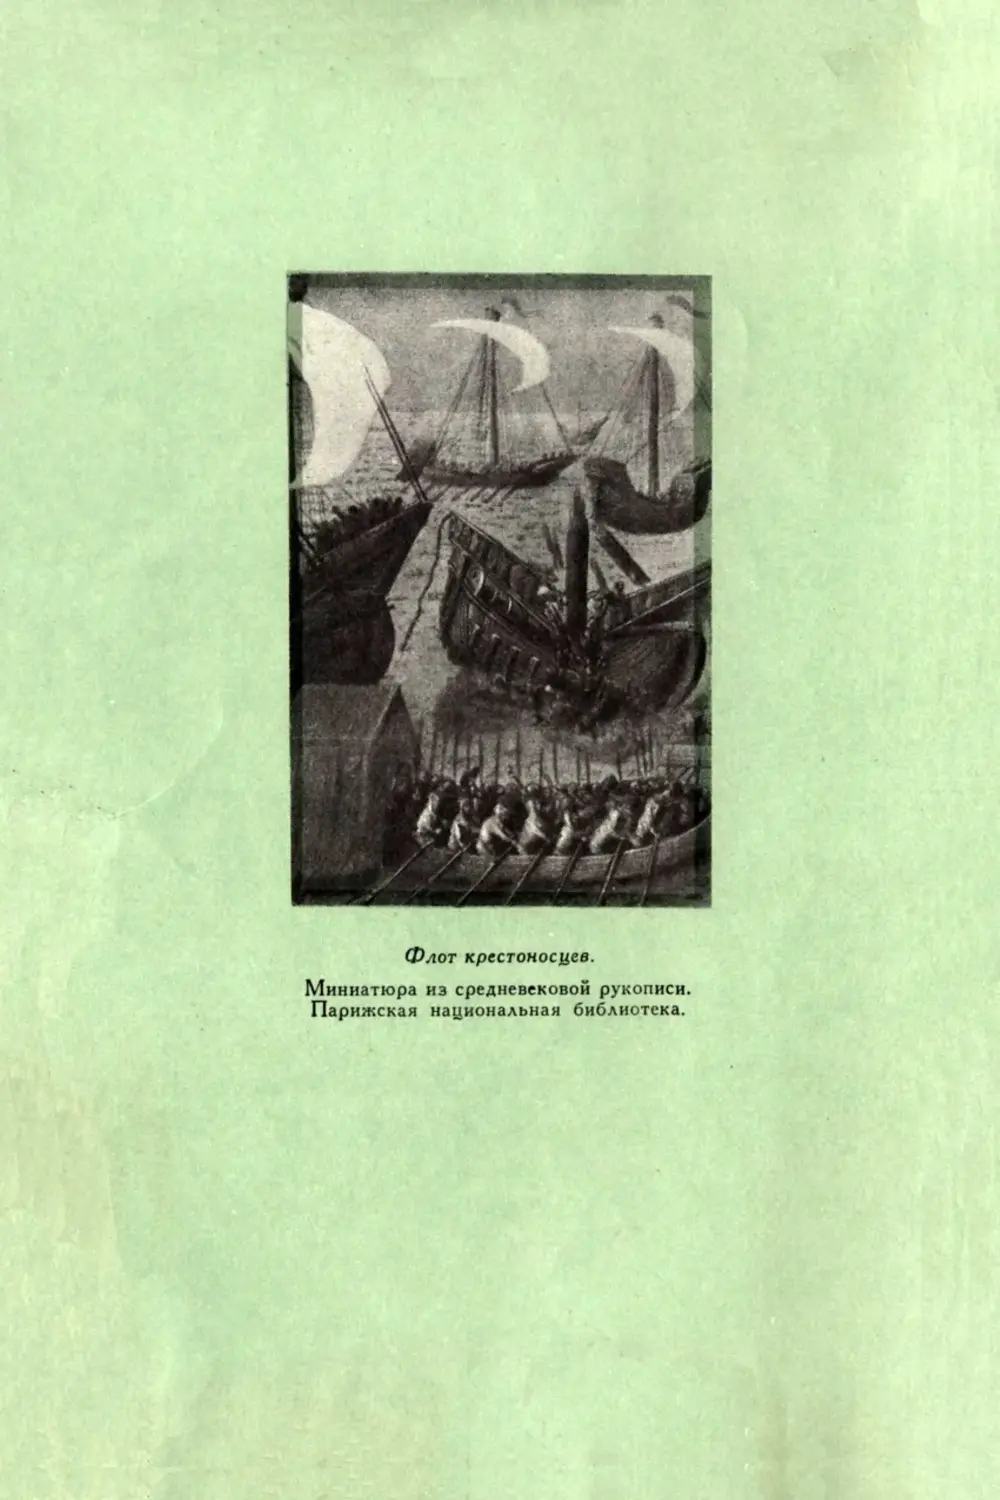 де Клари Р. Завоевание Константинополя - 1986
Вклейка. Флот крестоносцев